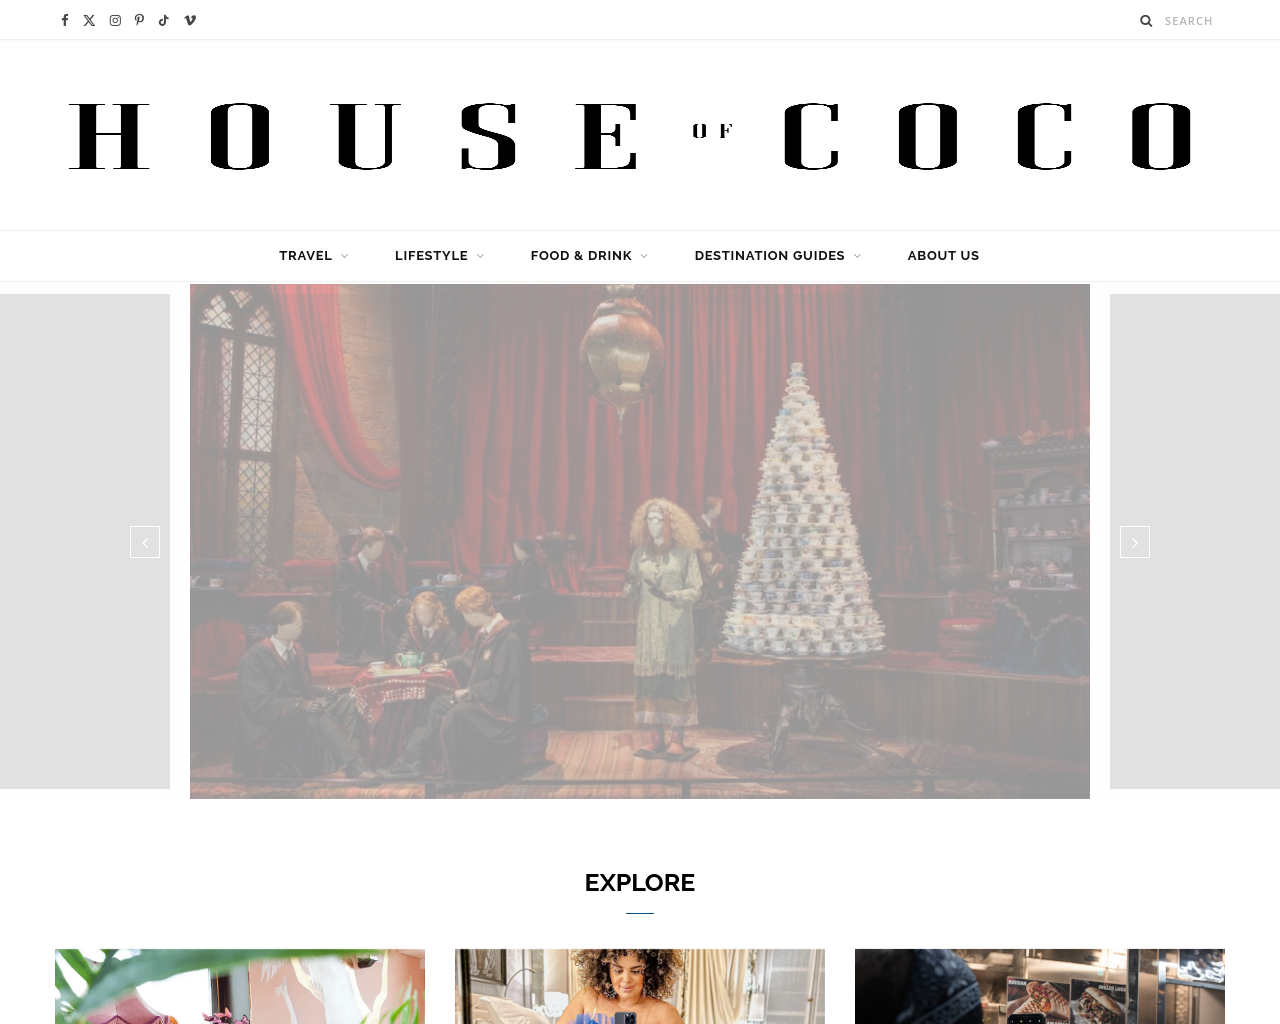 houseofcoco.net